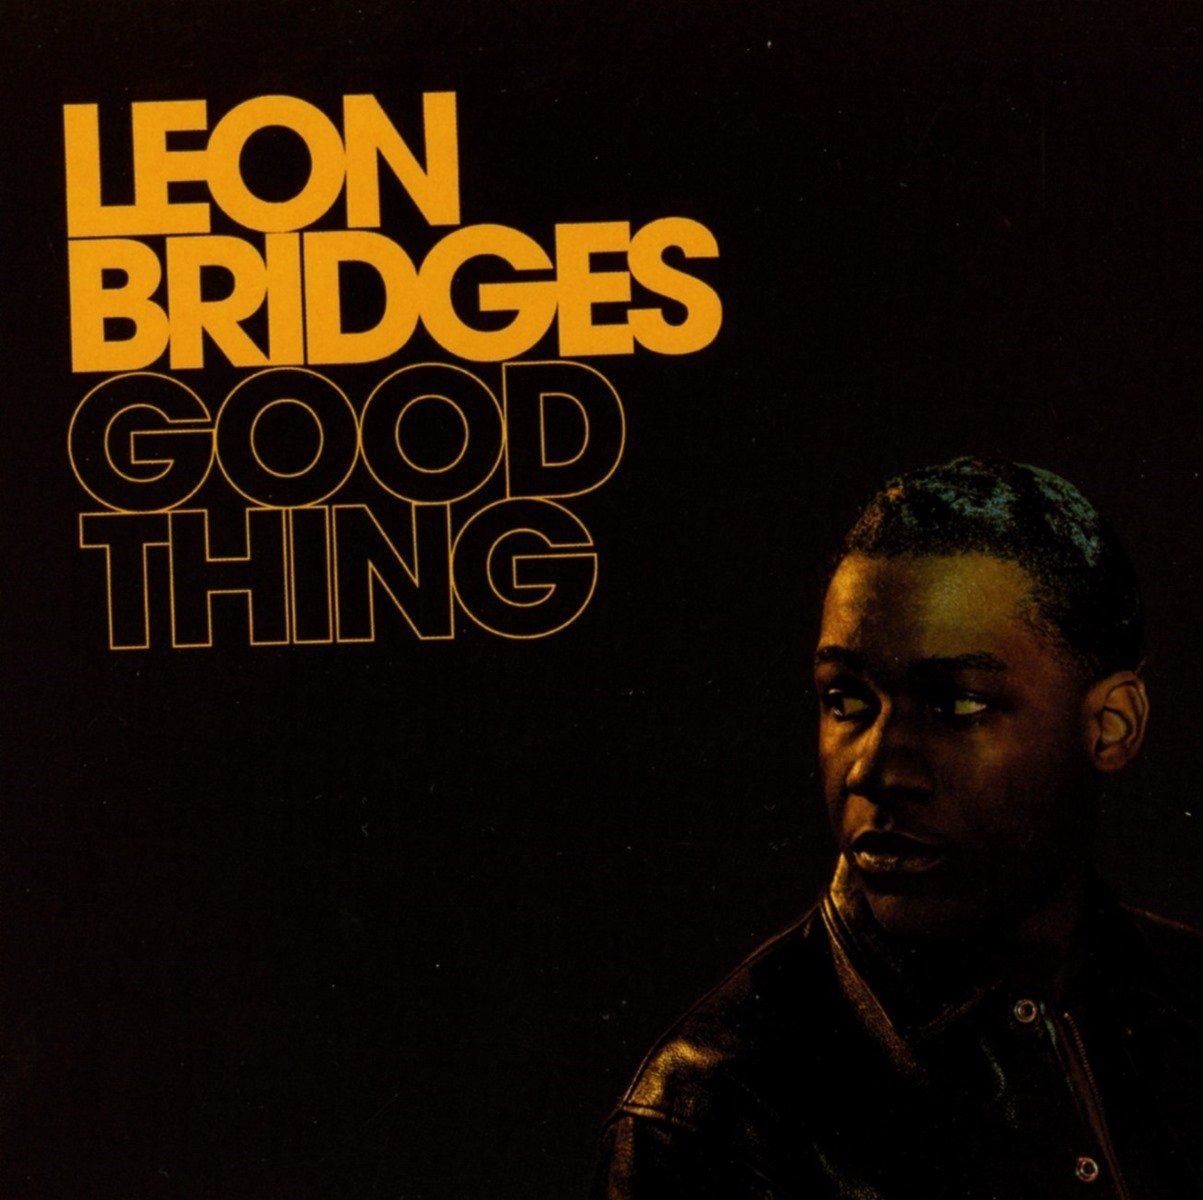 Leon Bridges Good things